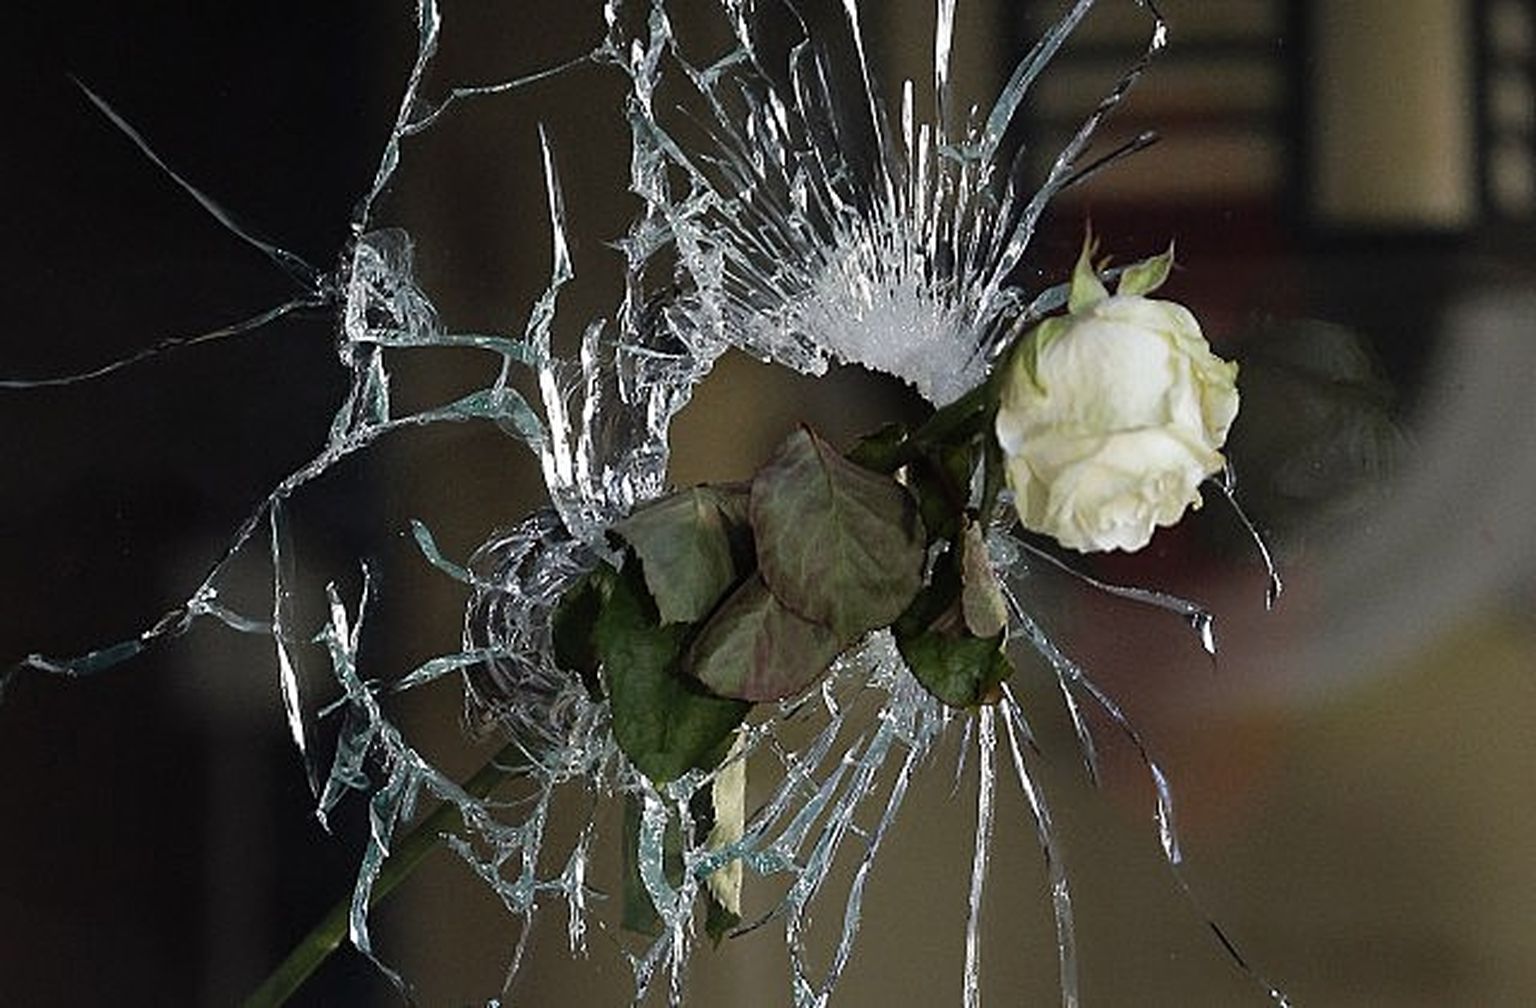 След от пули в парижском ресторане после трагедии 13 ноября